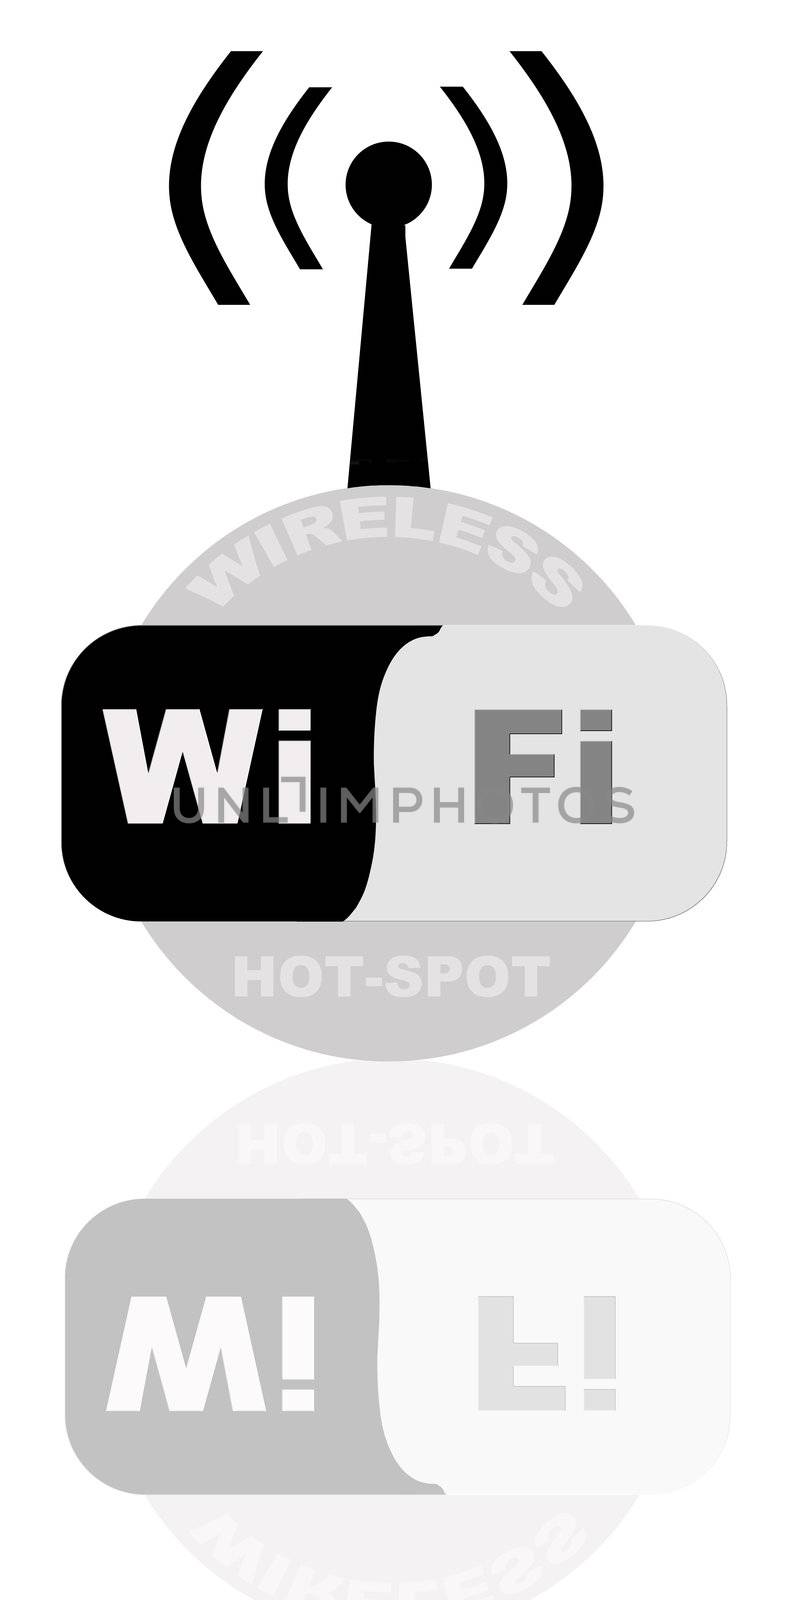 Wireless Hot Spot sign by berkan